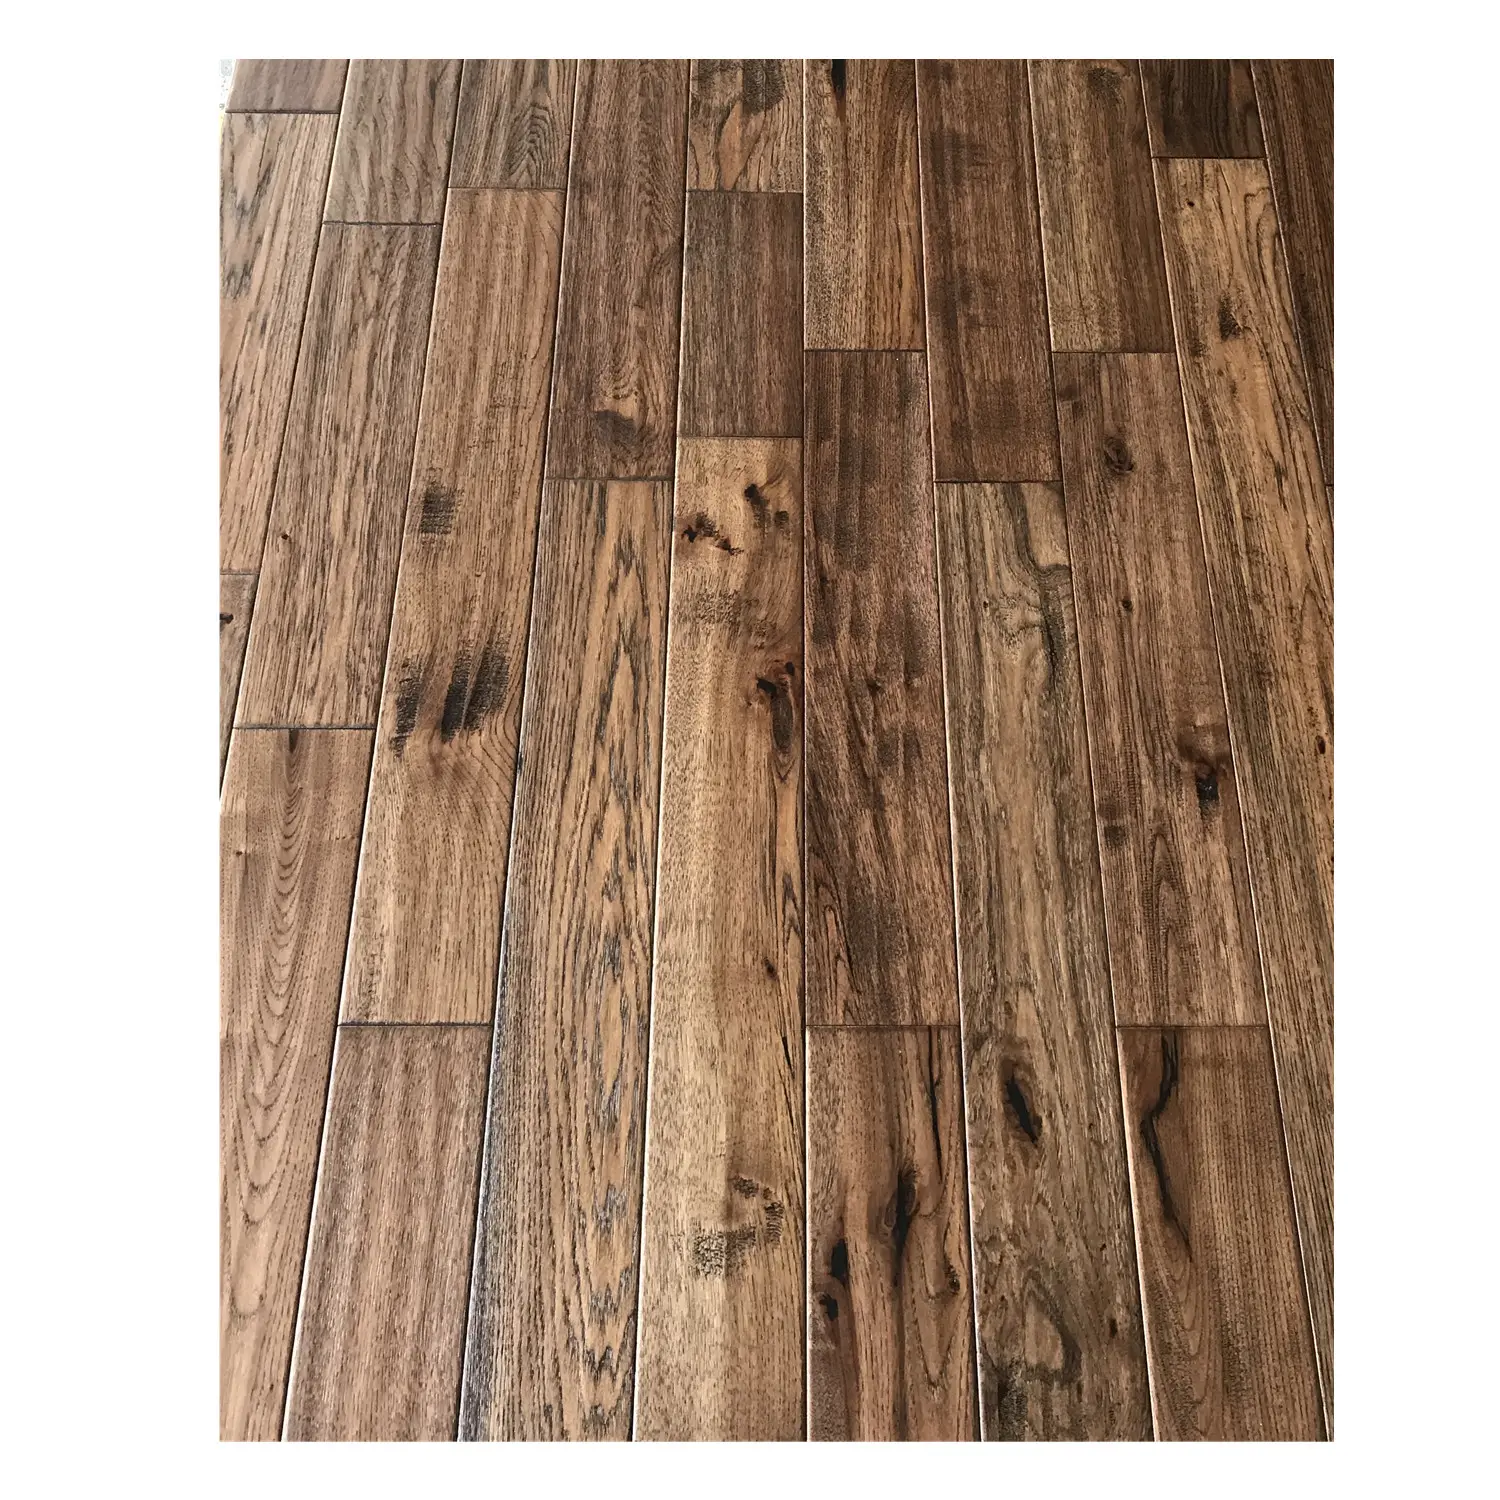 2020 popular hardwood Hickory wooden parquet flooring